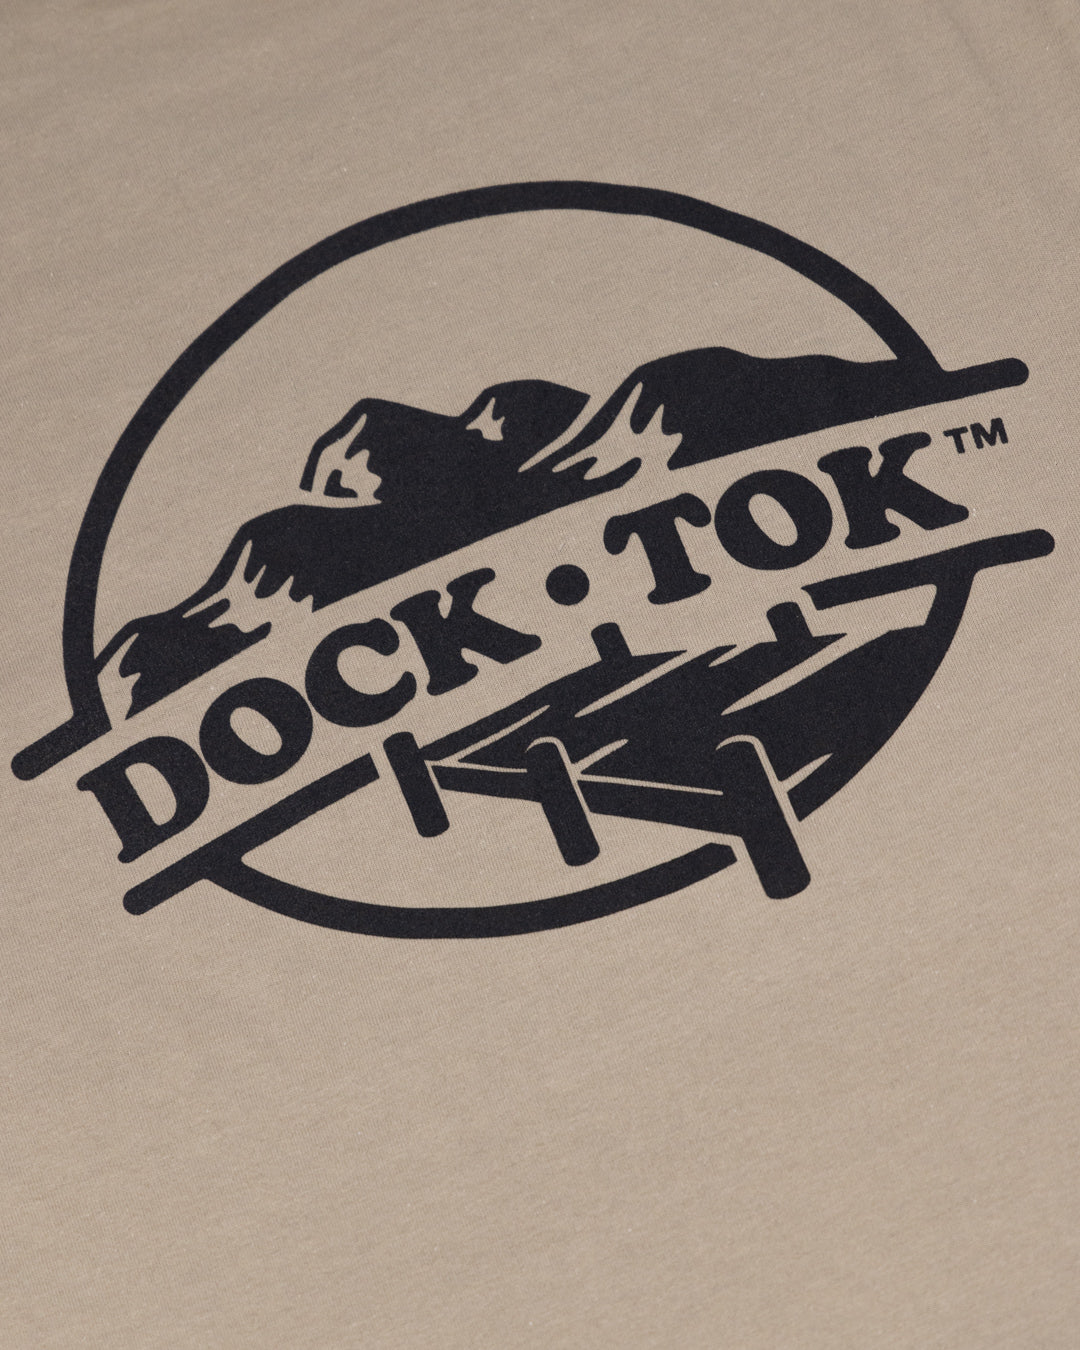 Dock Tok Tee- Khaki Green